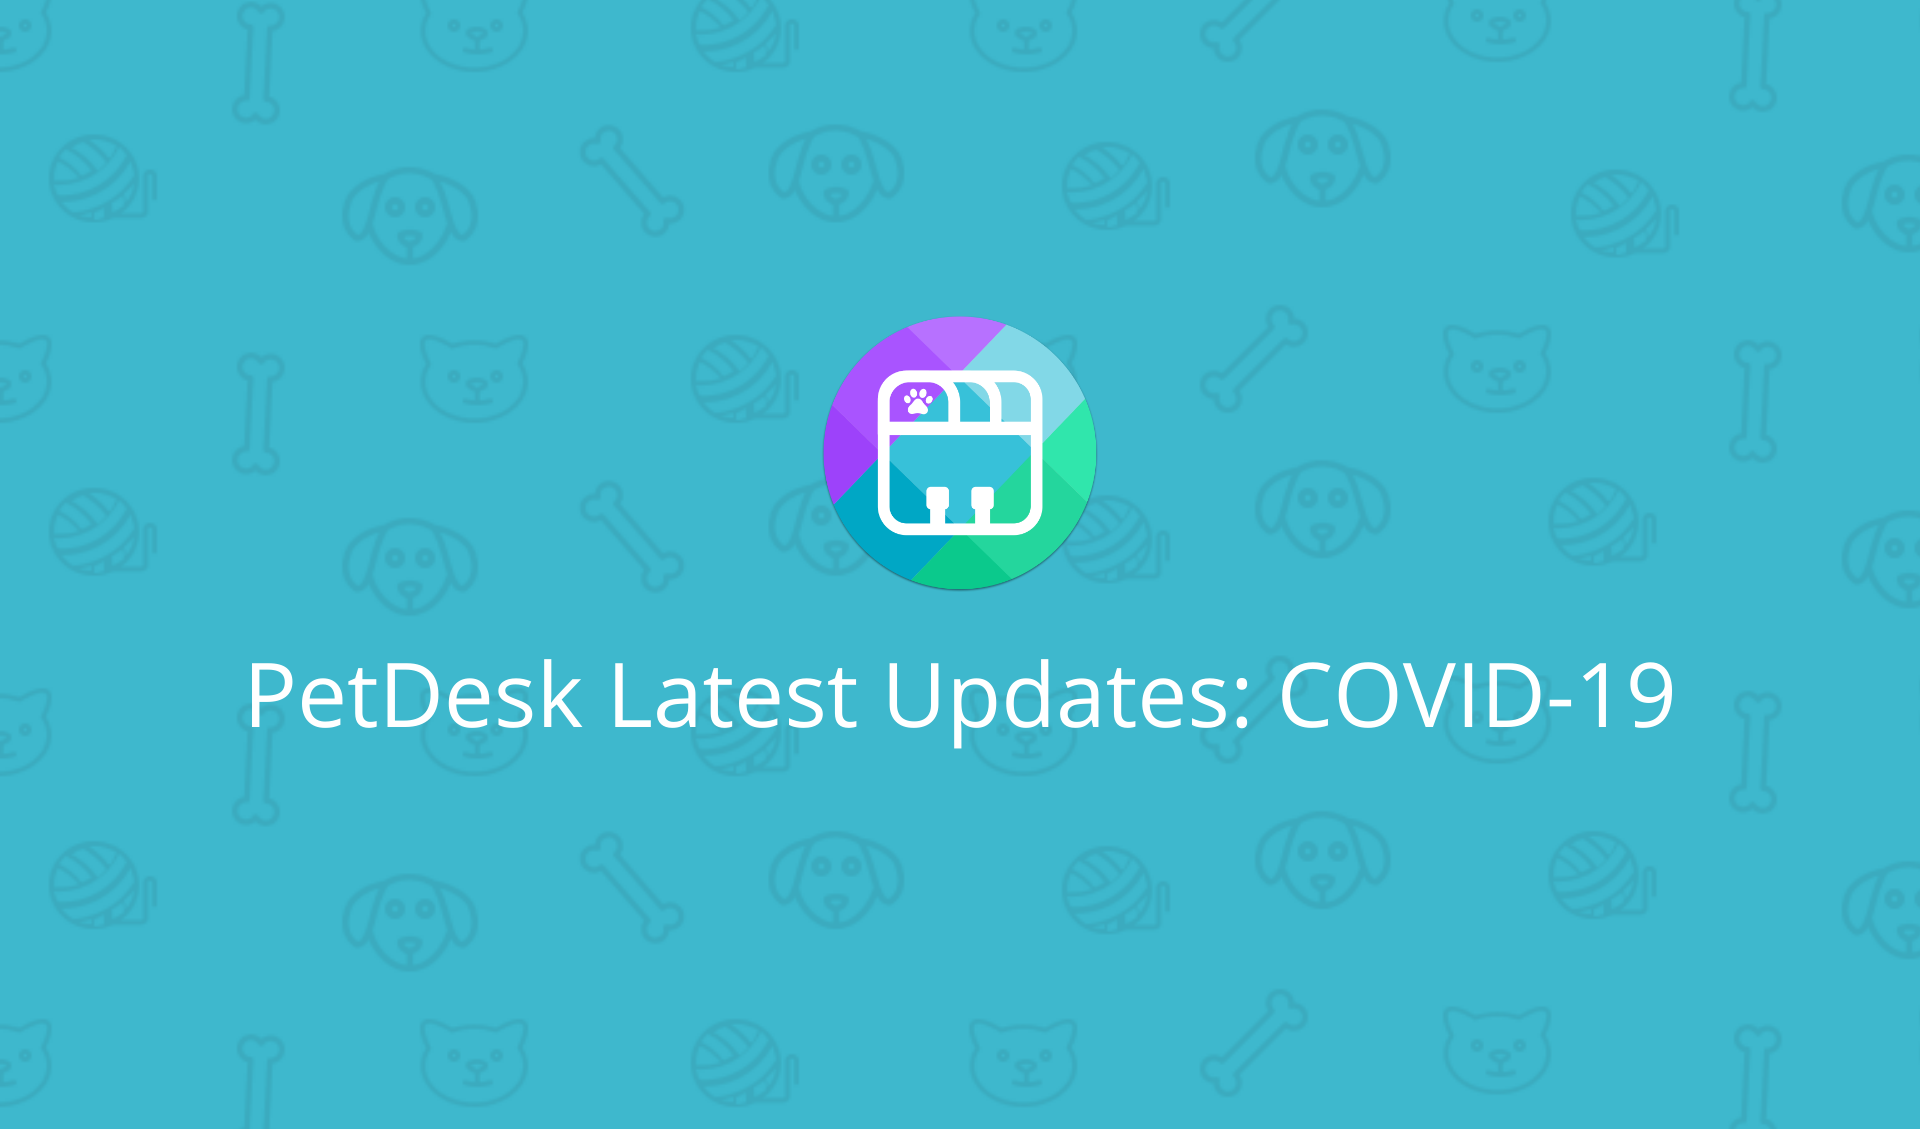 PetDesk Latest Updates: COVID-19